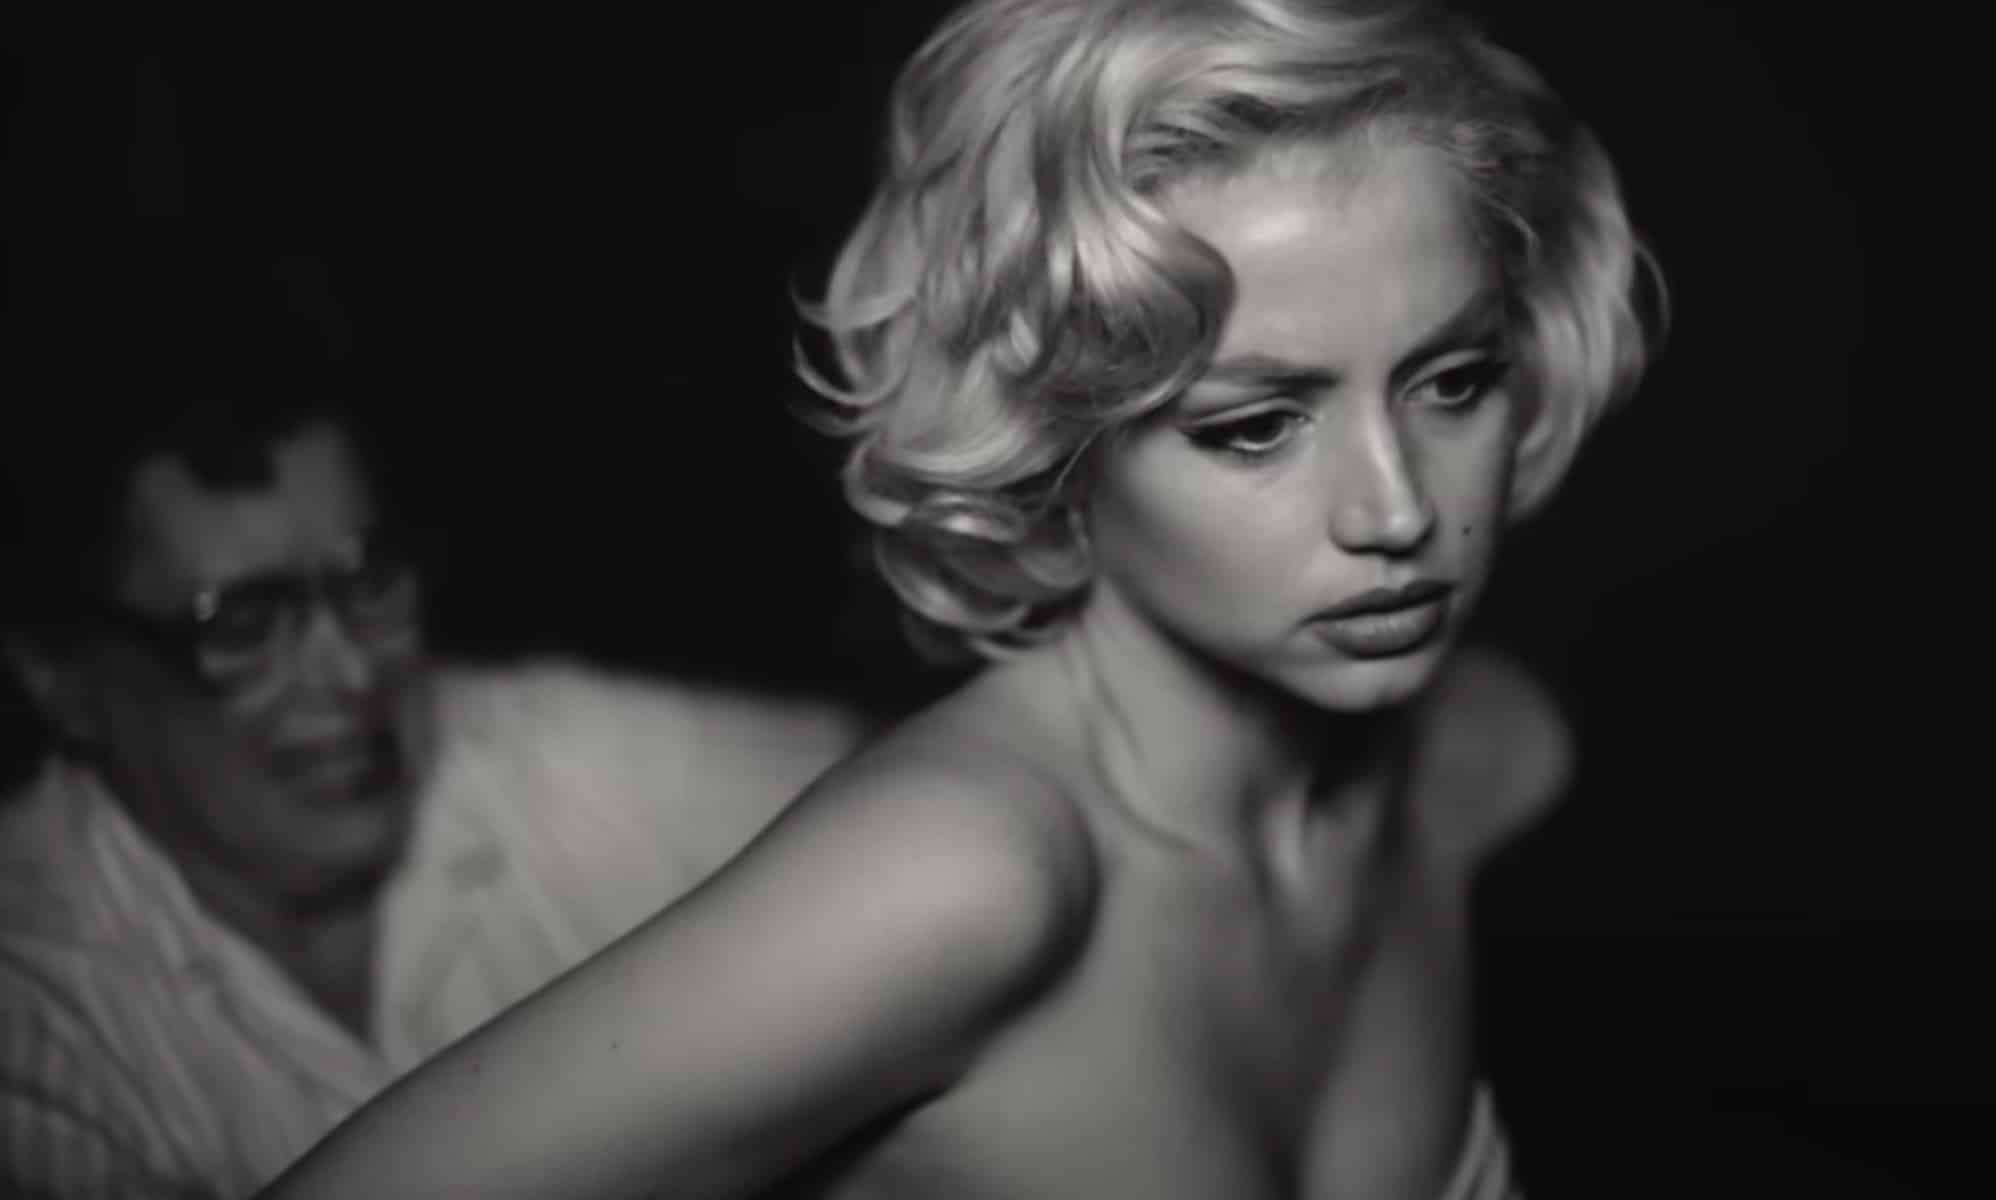 Marilyn Porn - Marilyn Monroe's Netflix biopic Blonde comes out to huge backlash